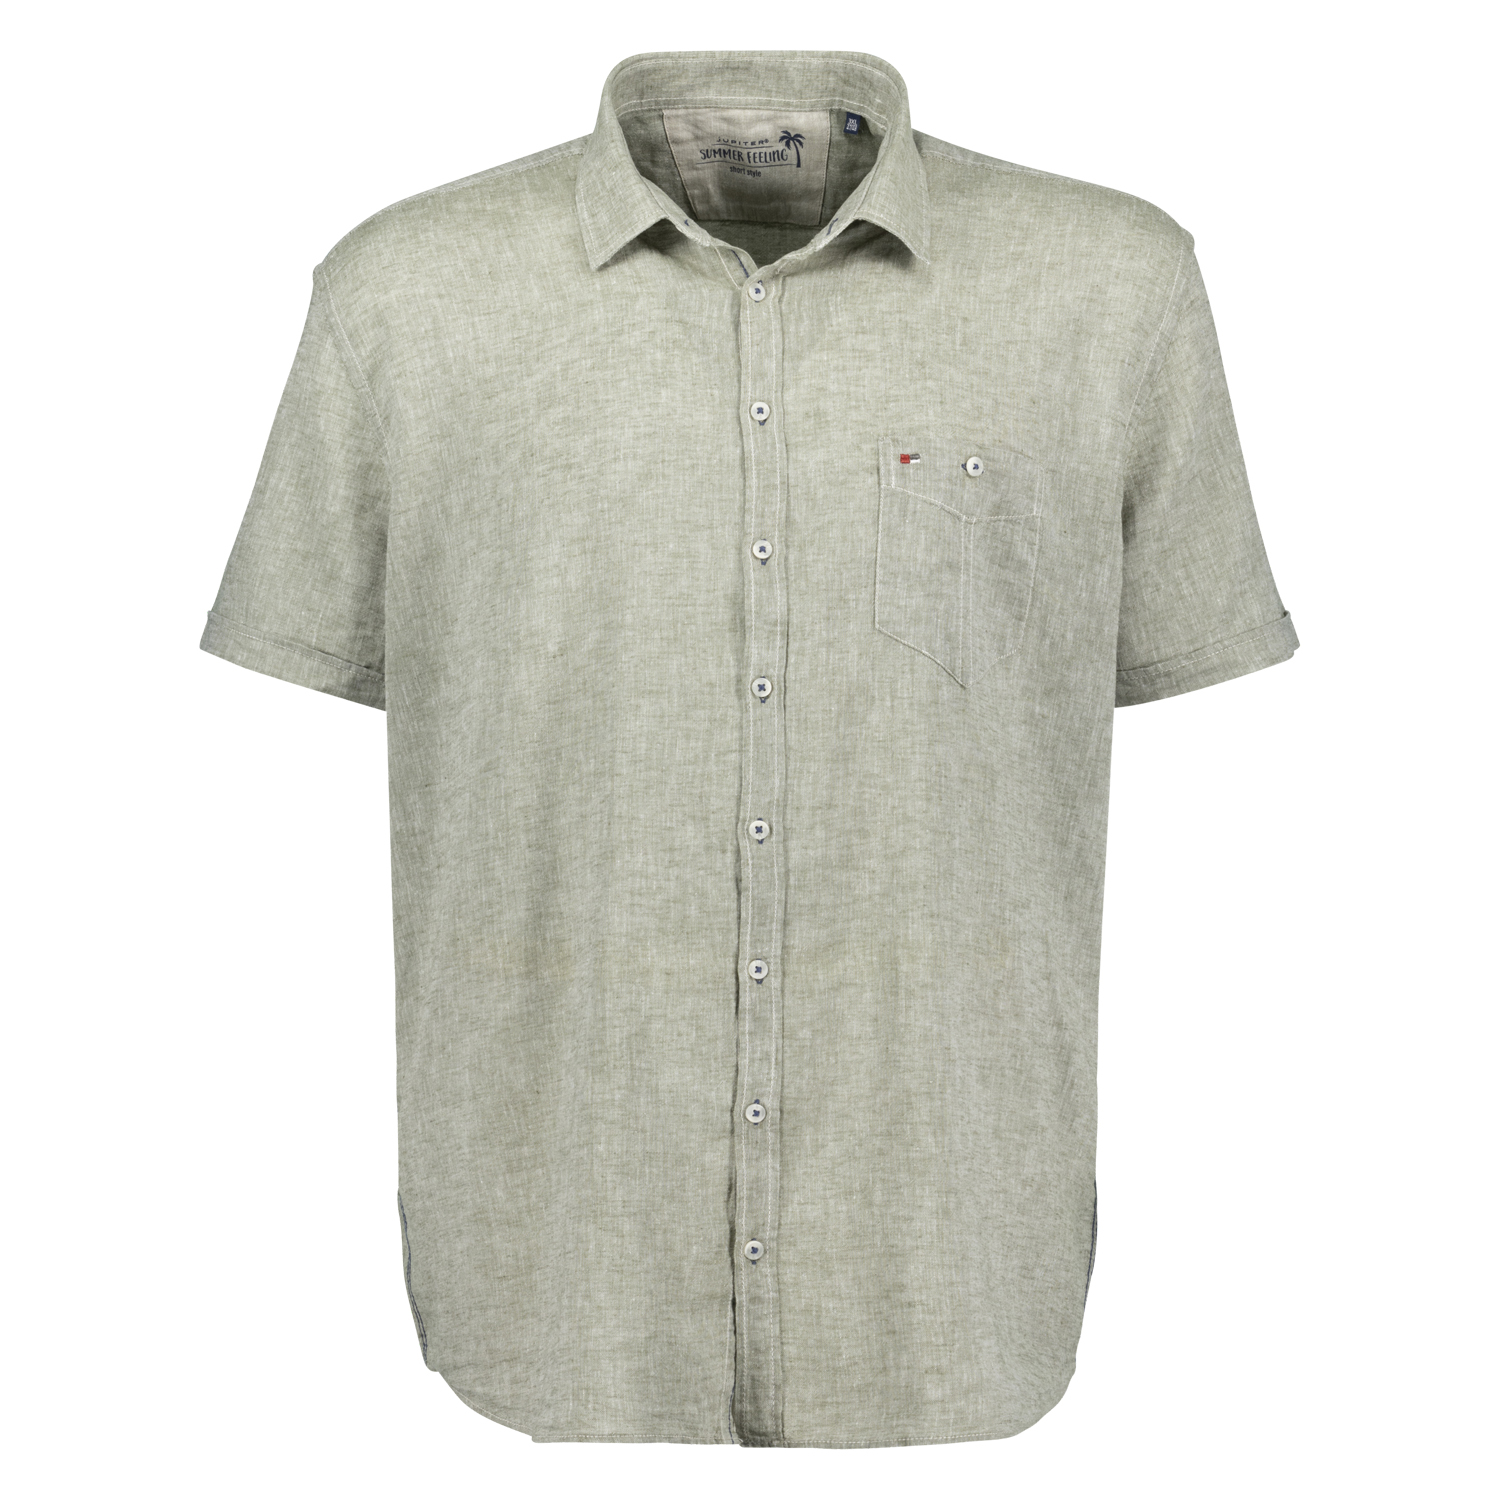 Mens Short Sleeve Summer Shirt in olive by Jupiter in Oversizes 3XL-7XL